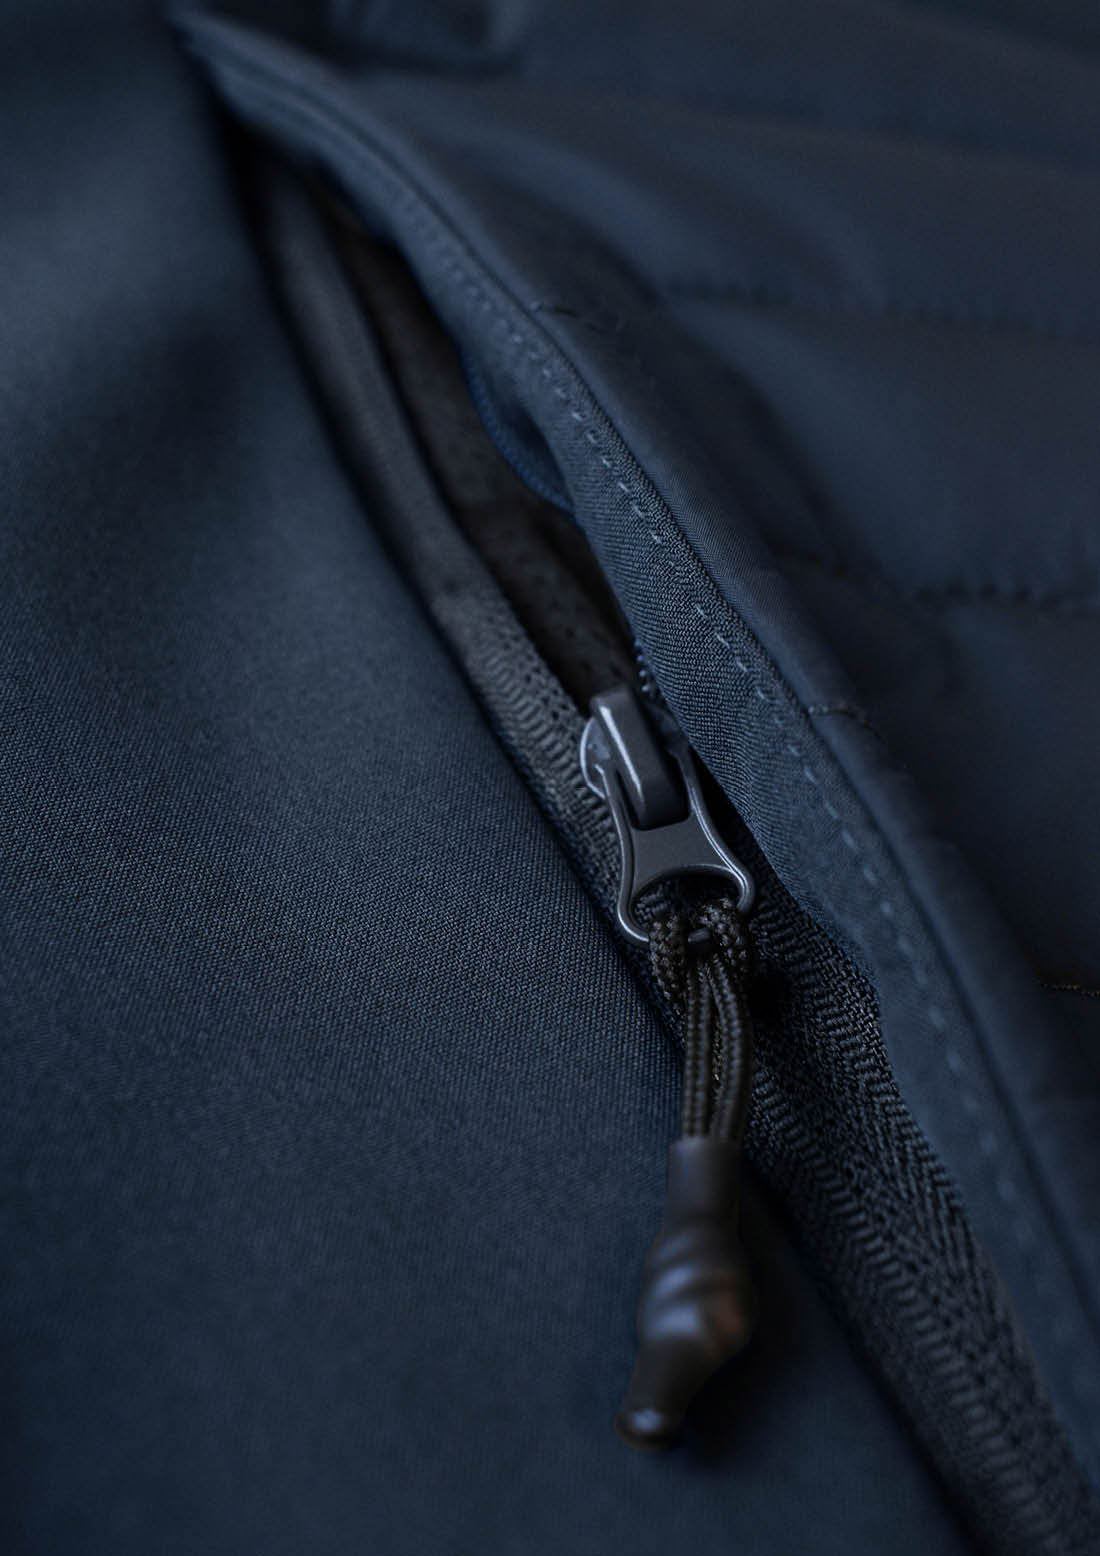 Nimbus Play Bloomsdale – Comfortable Hybrid Jacket